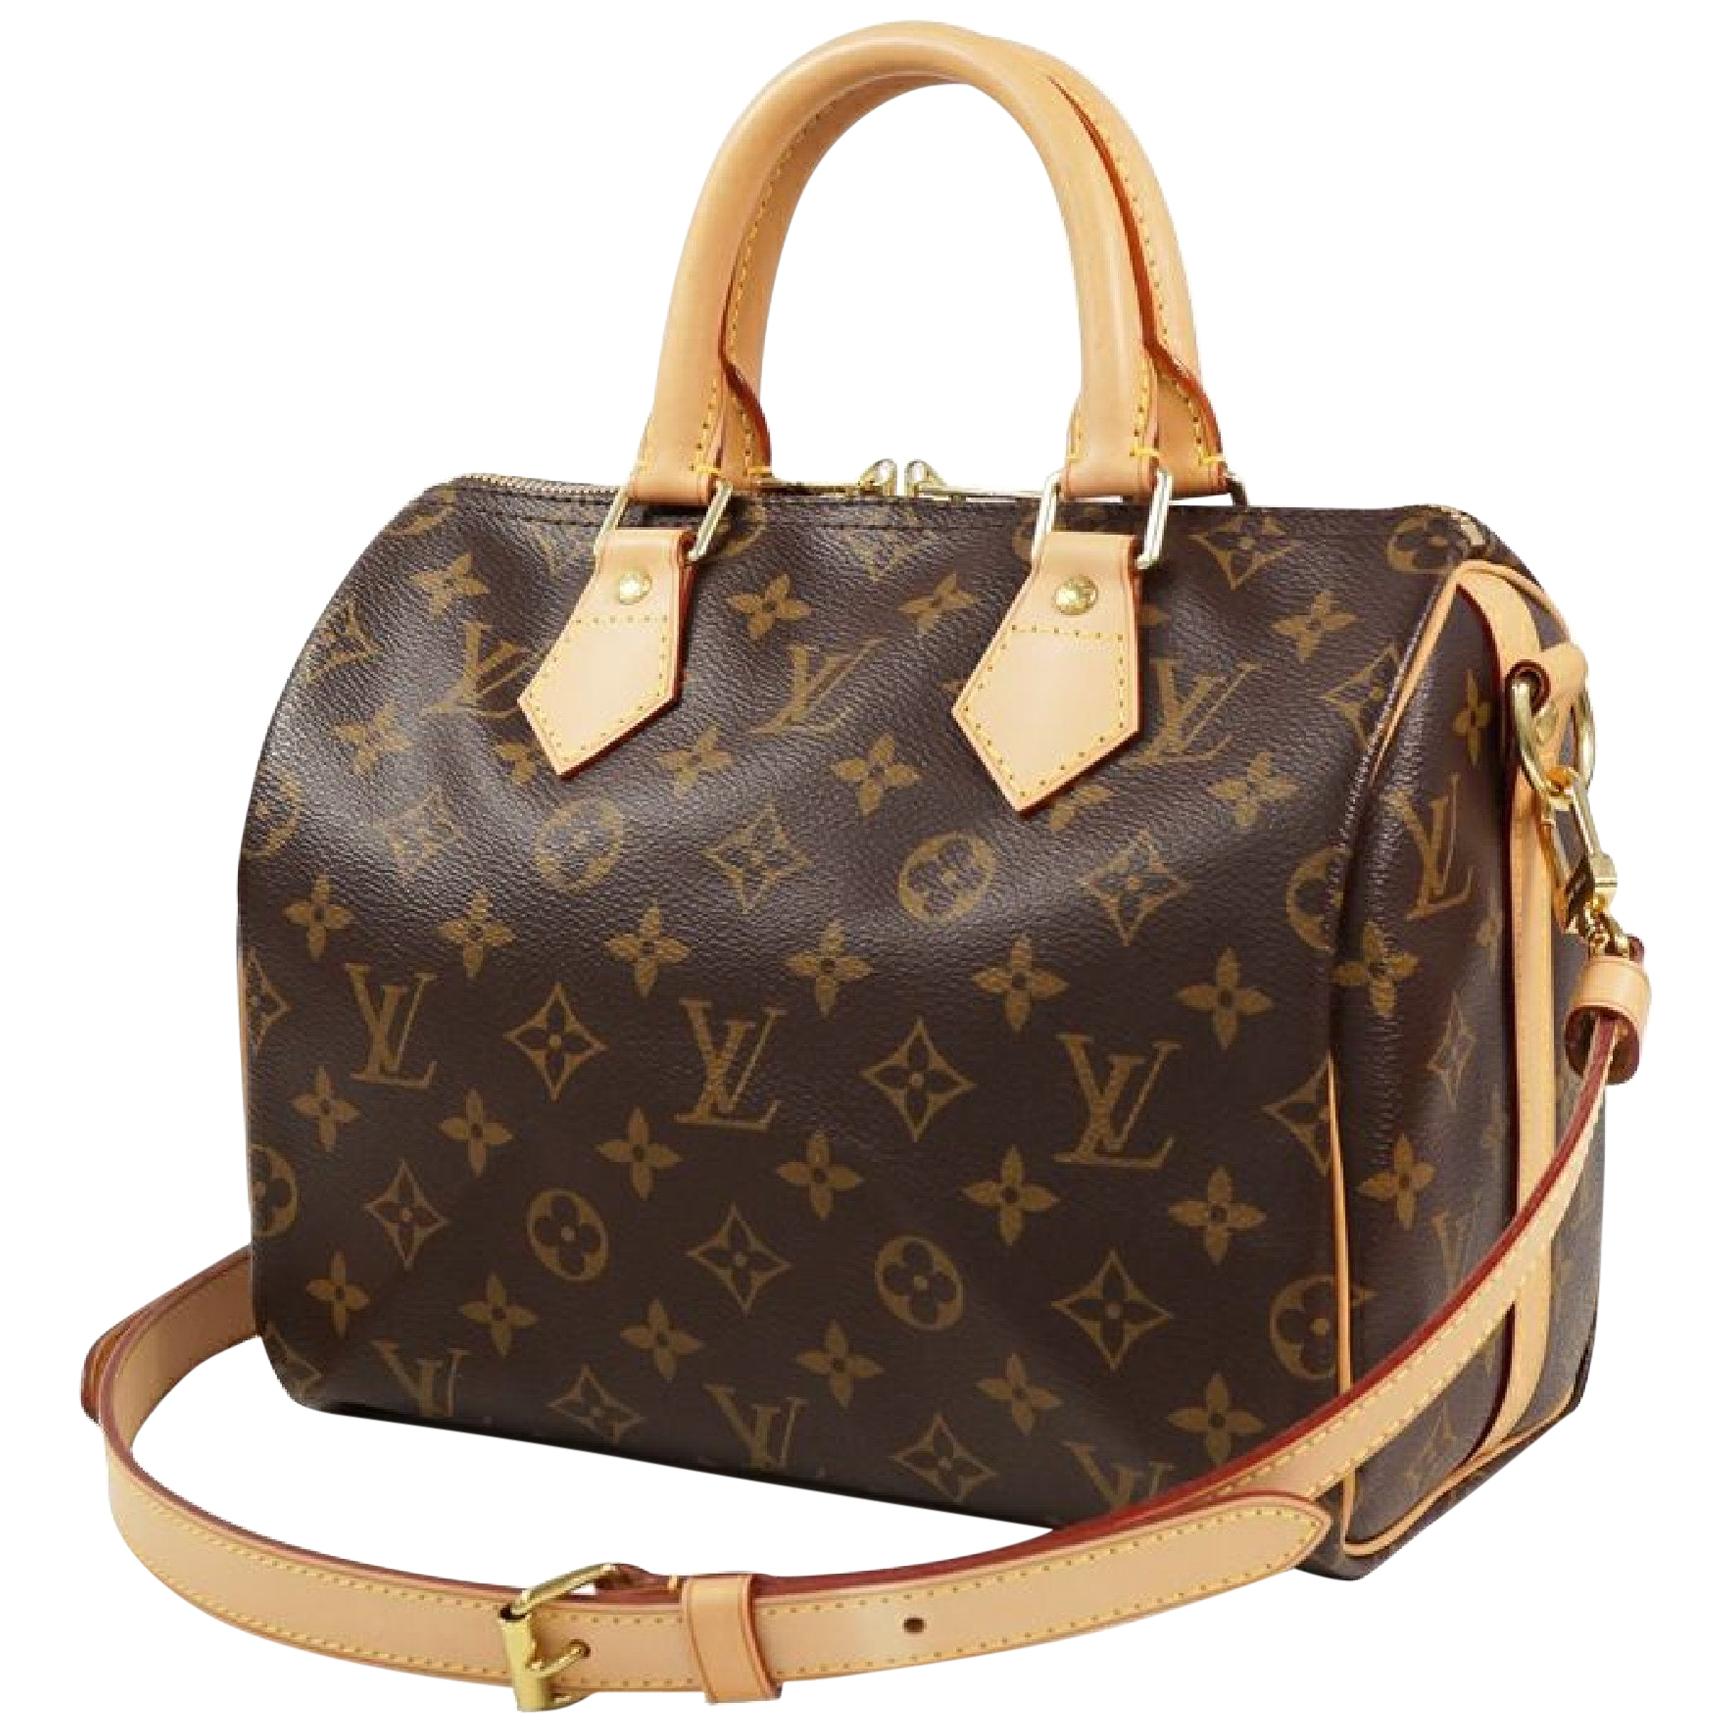 LOUIS VUITTON 2WAY shoulder bag Speedy bandouliere 25 Womens handbag M41113 brow